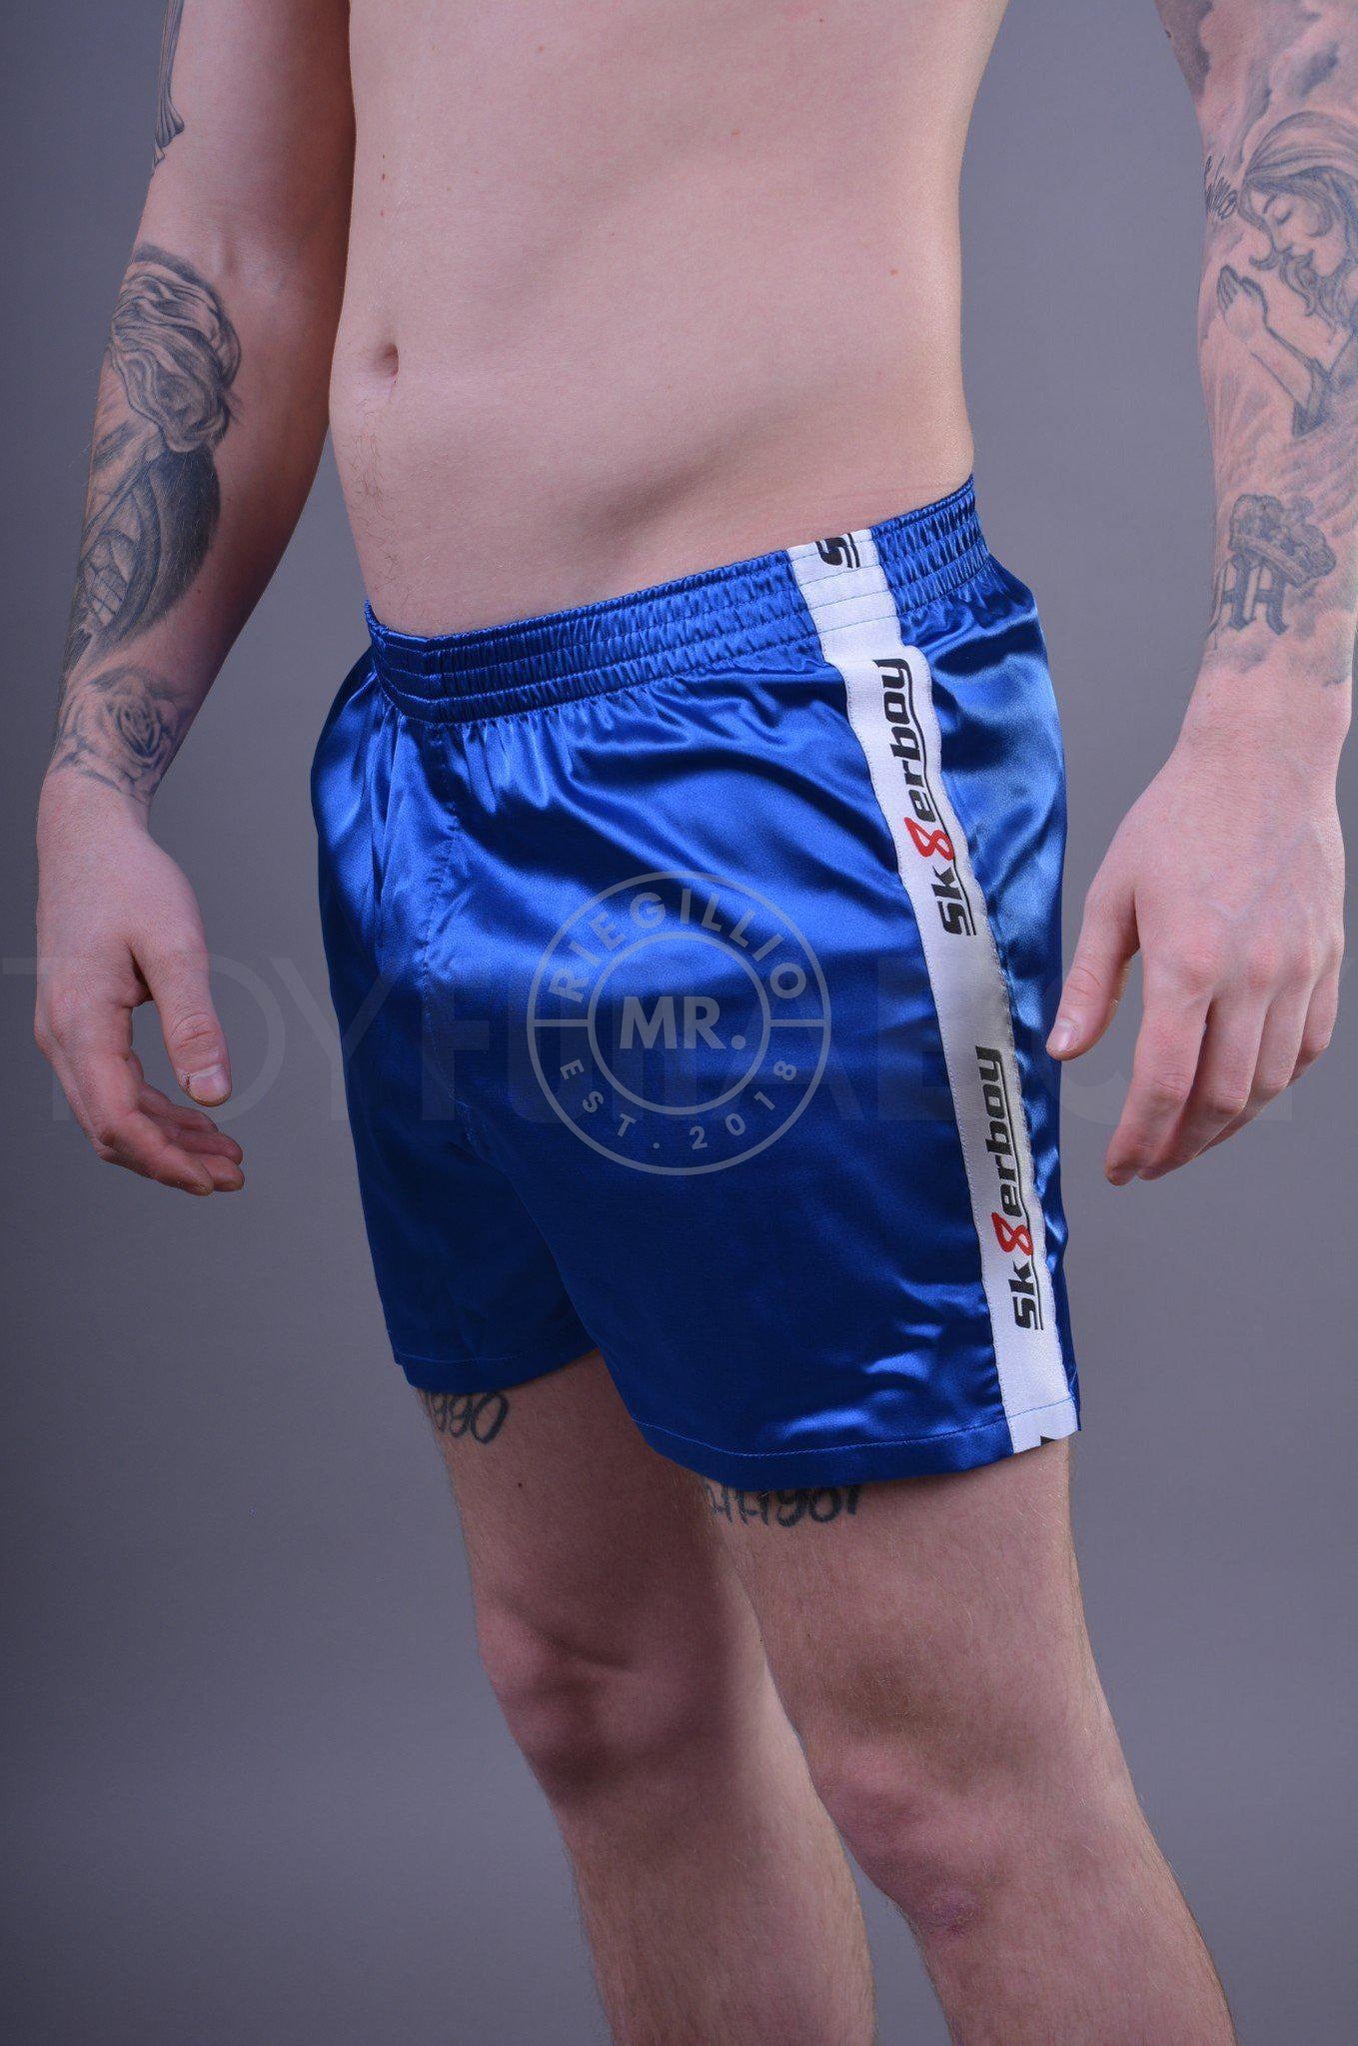 Sk8erboy Shiny Boxershort - Blue at MR. Riegillio